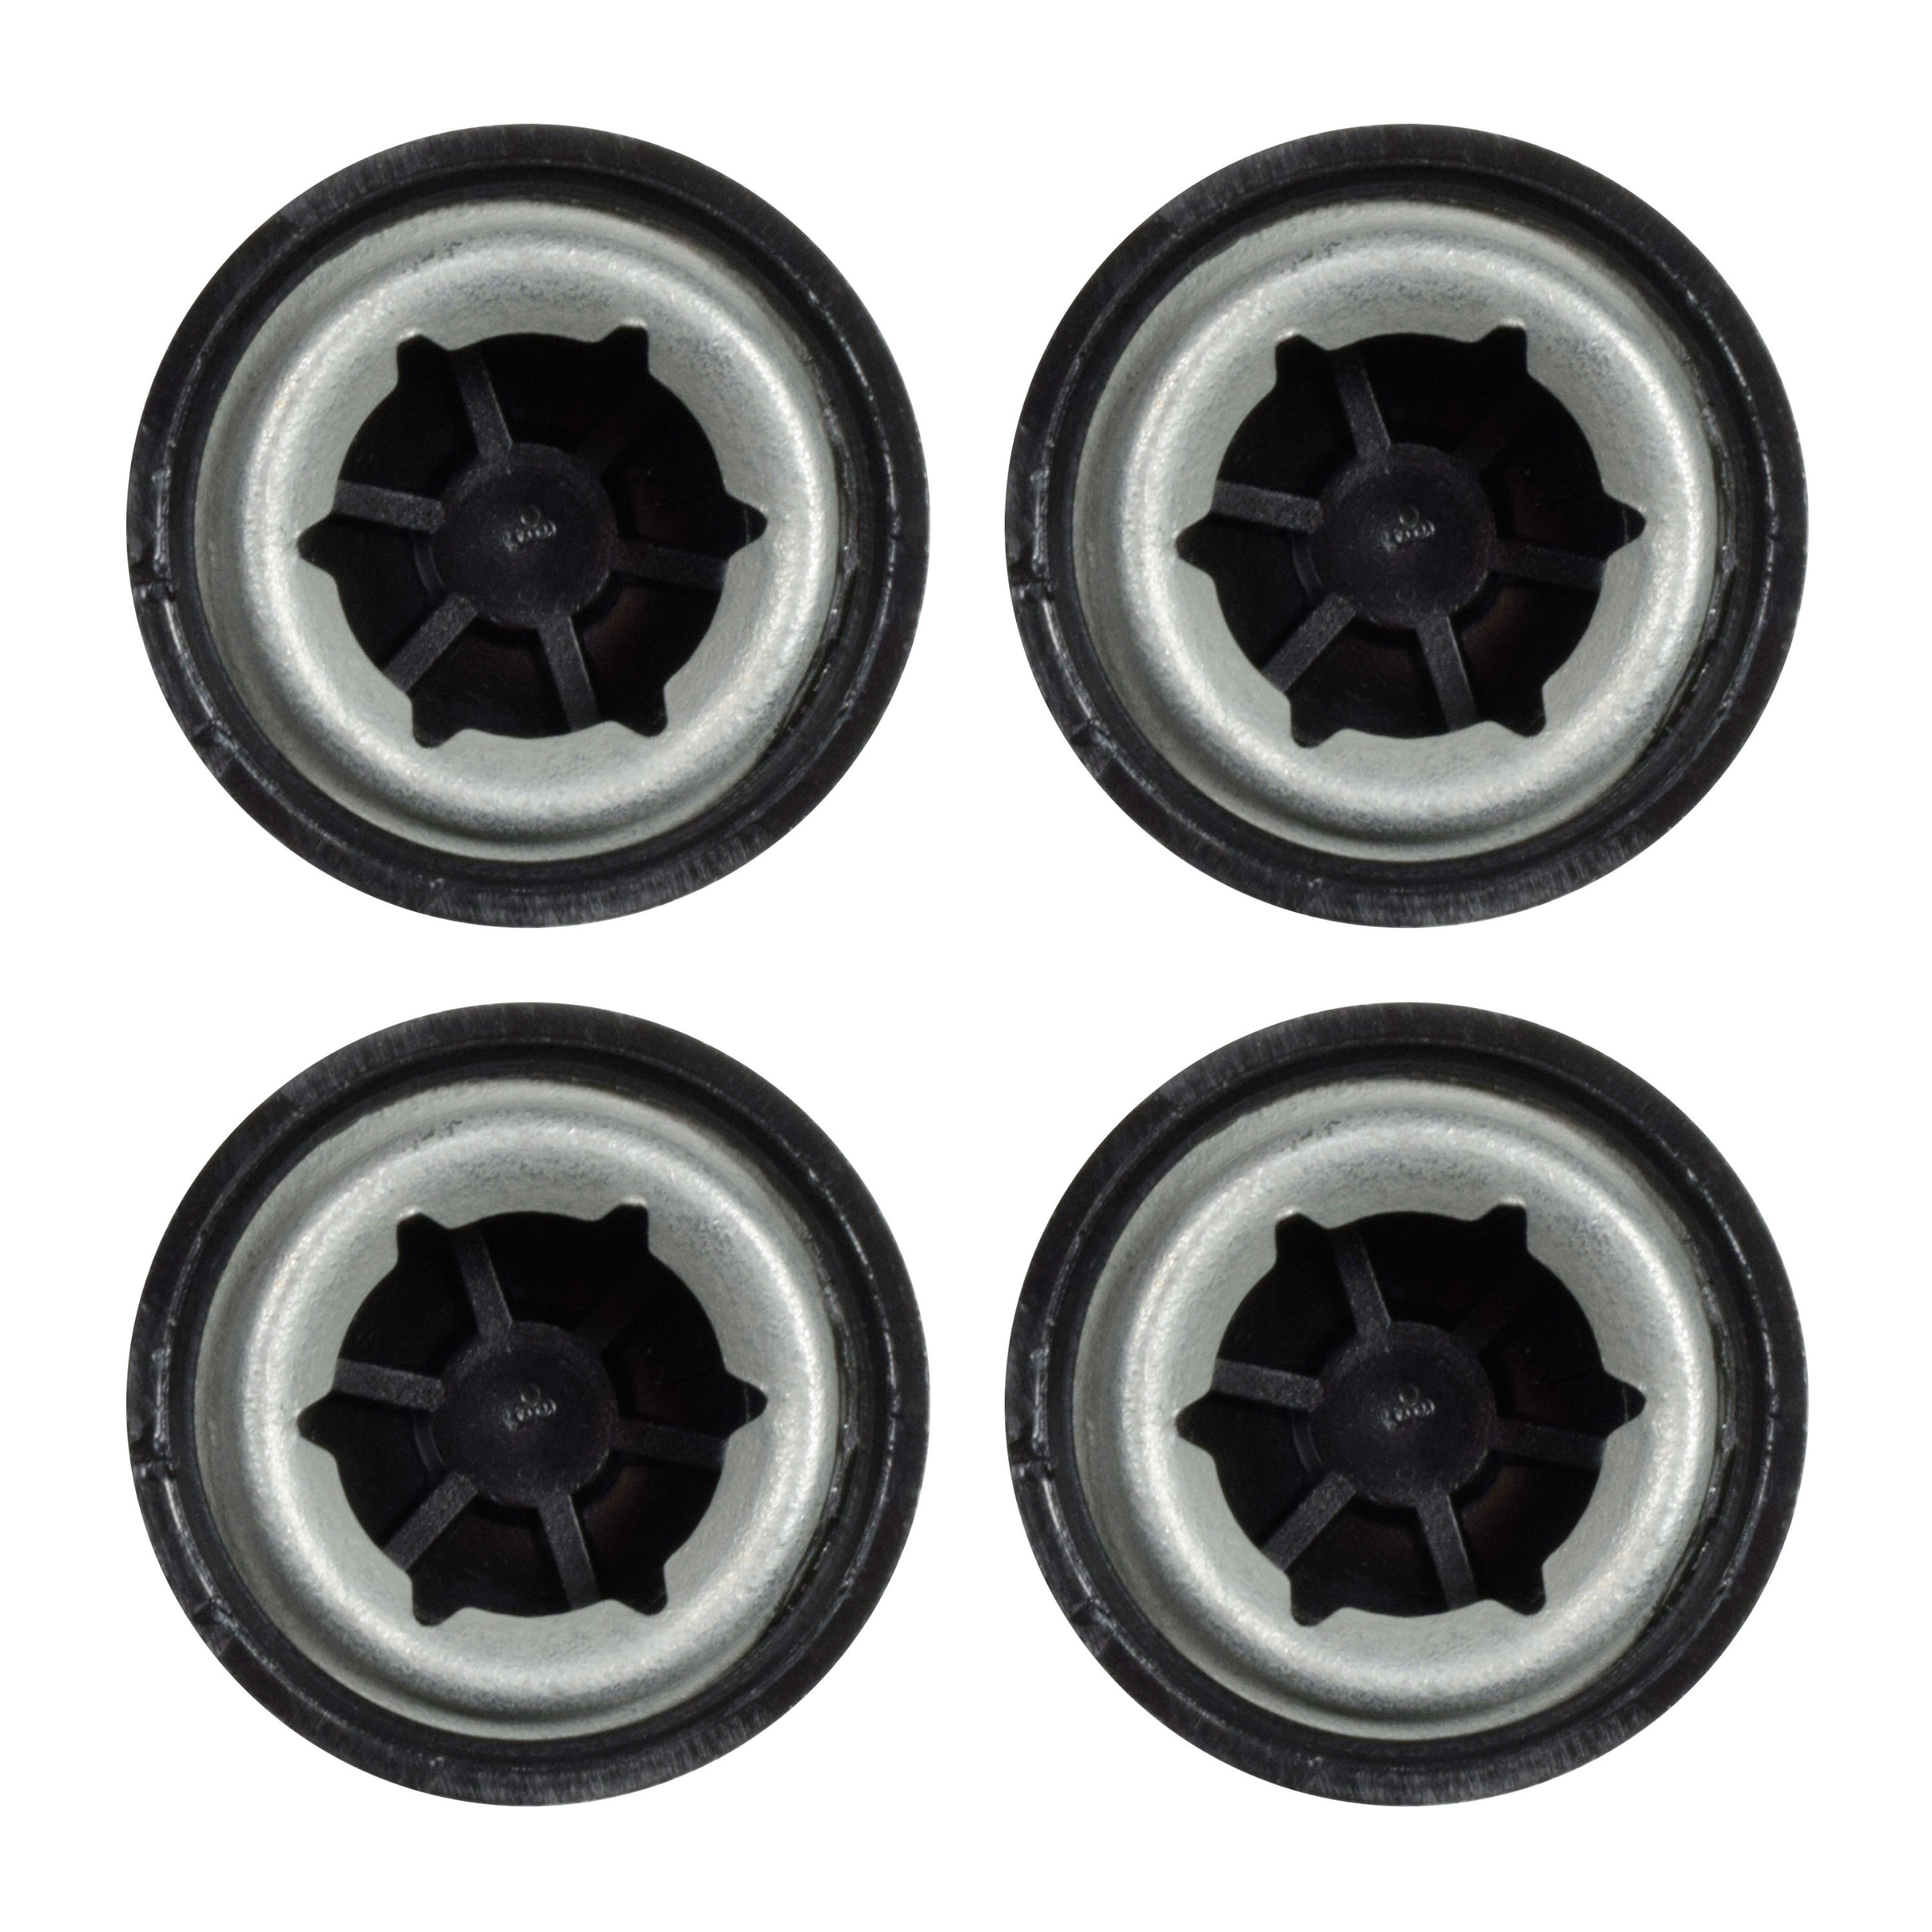 Power Wheels .437 Cap Nut Set of 4 Black 00801-1451 K3 for sale online 